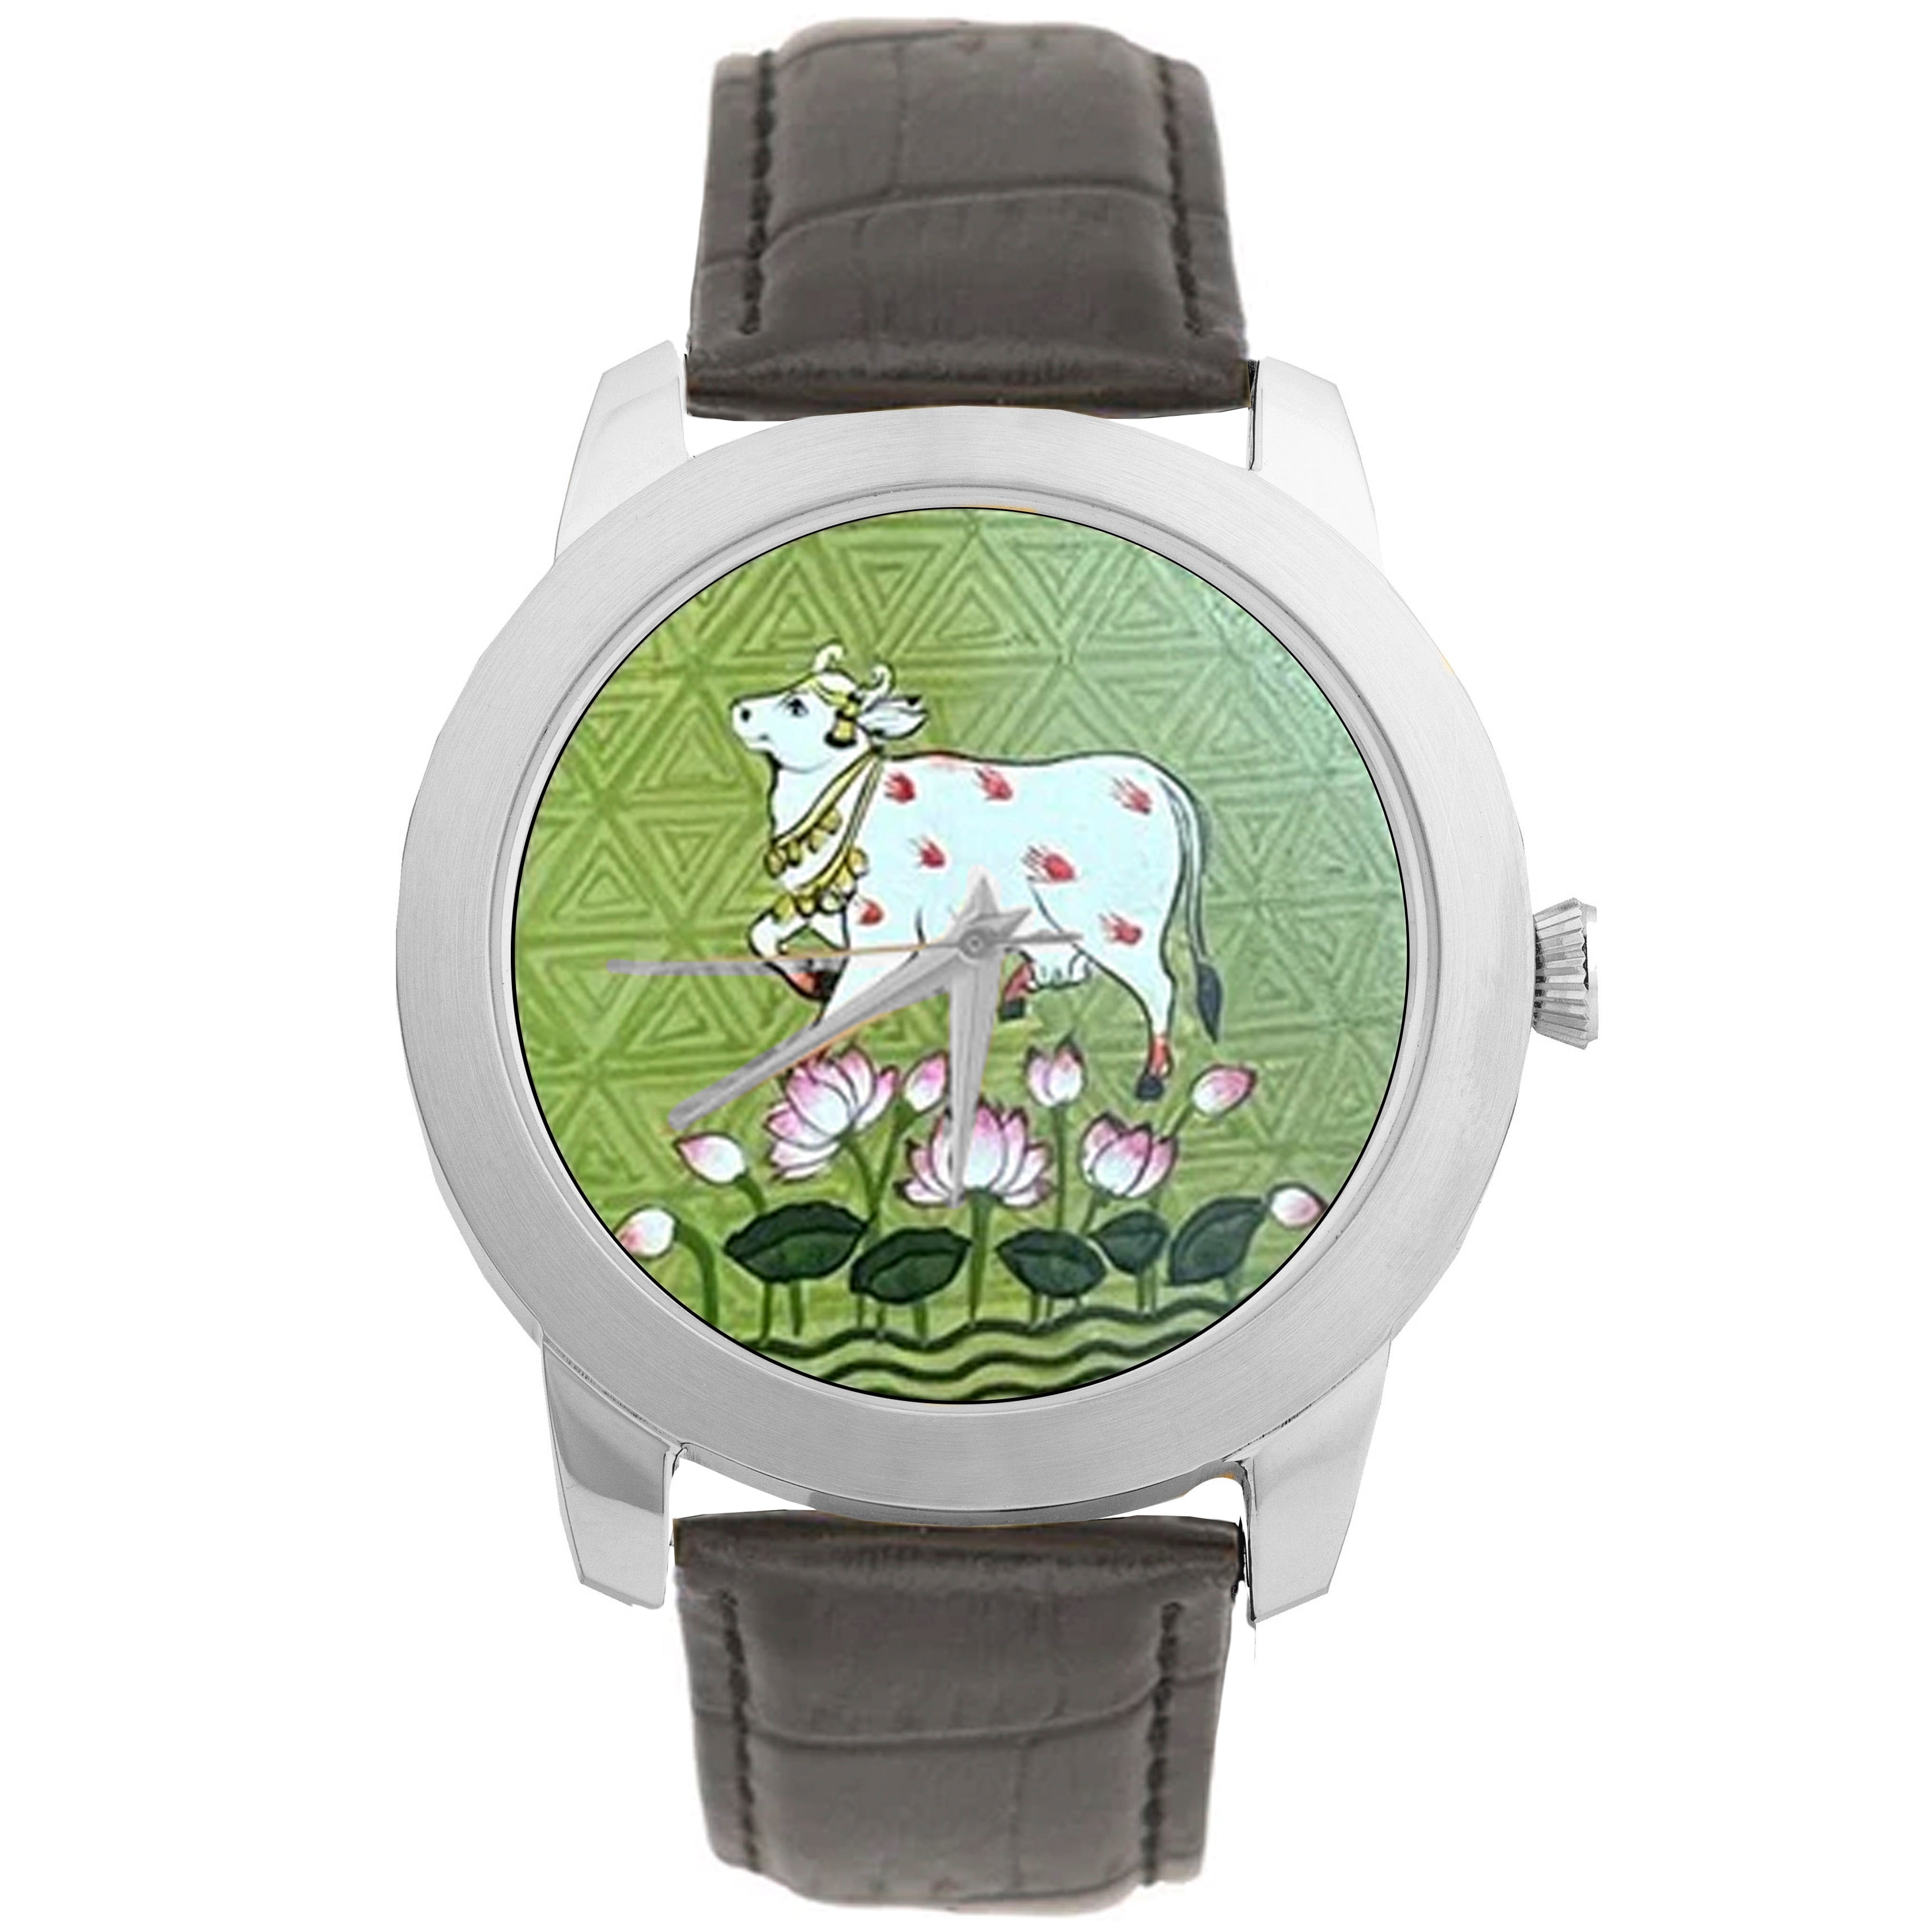 Elegance Cow Watch - Pichwai Watch (40mm)